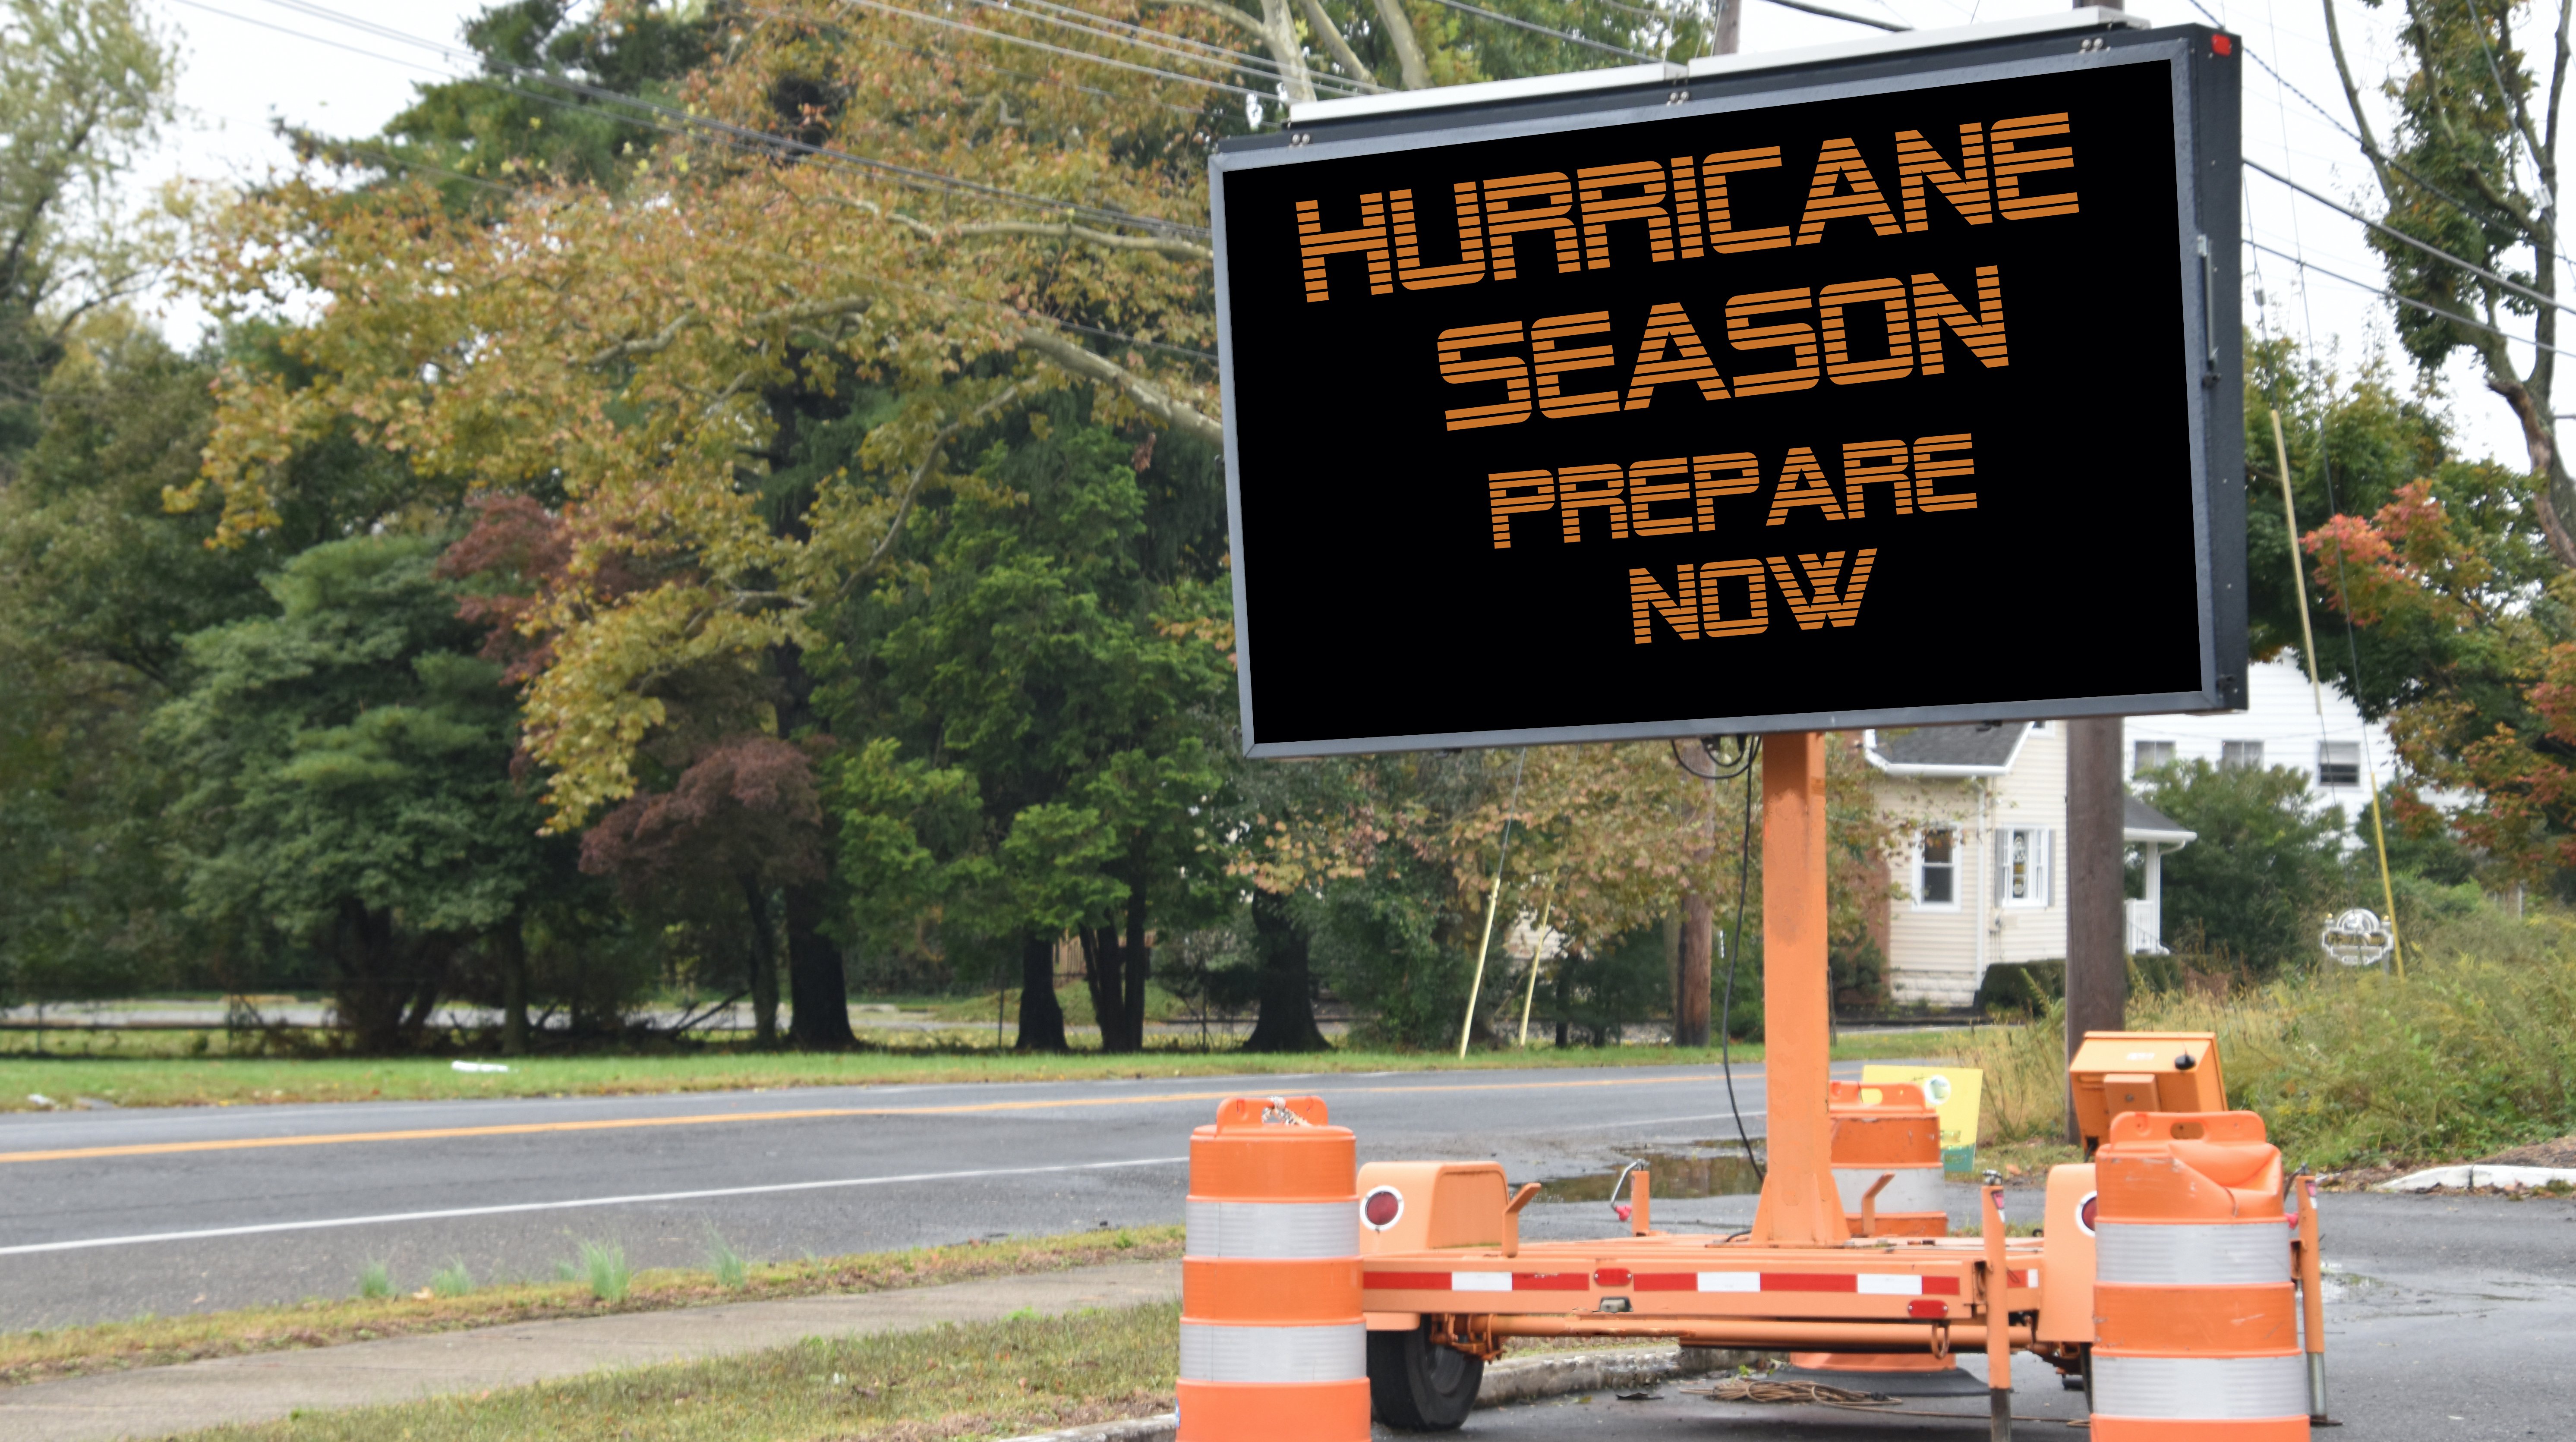 hurricane season road sign